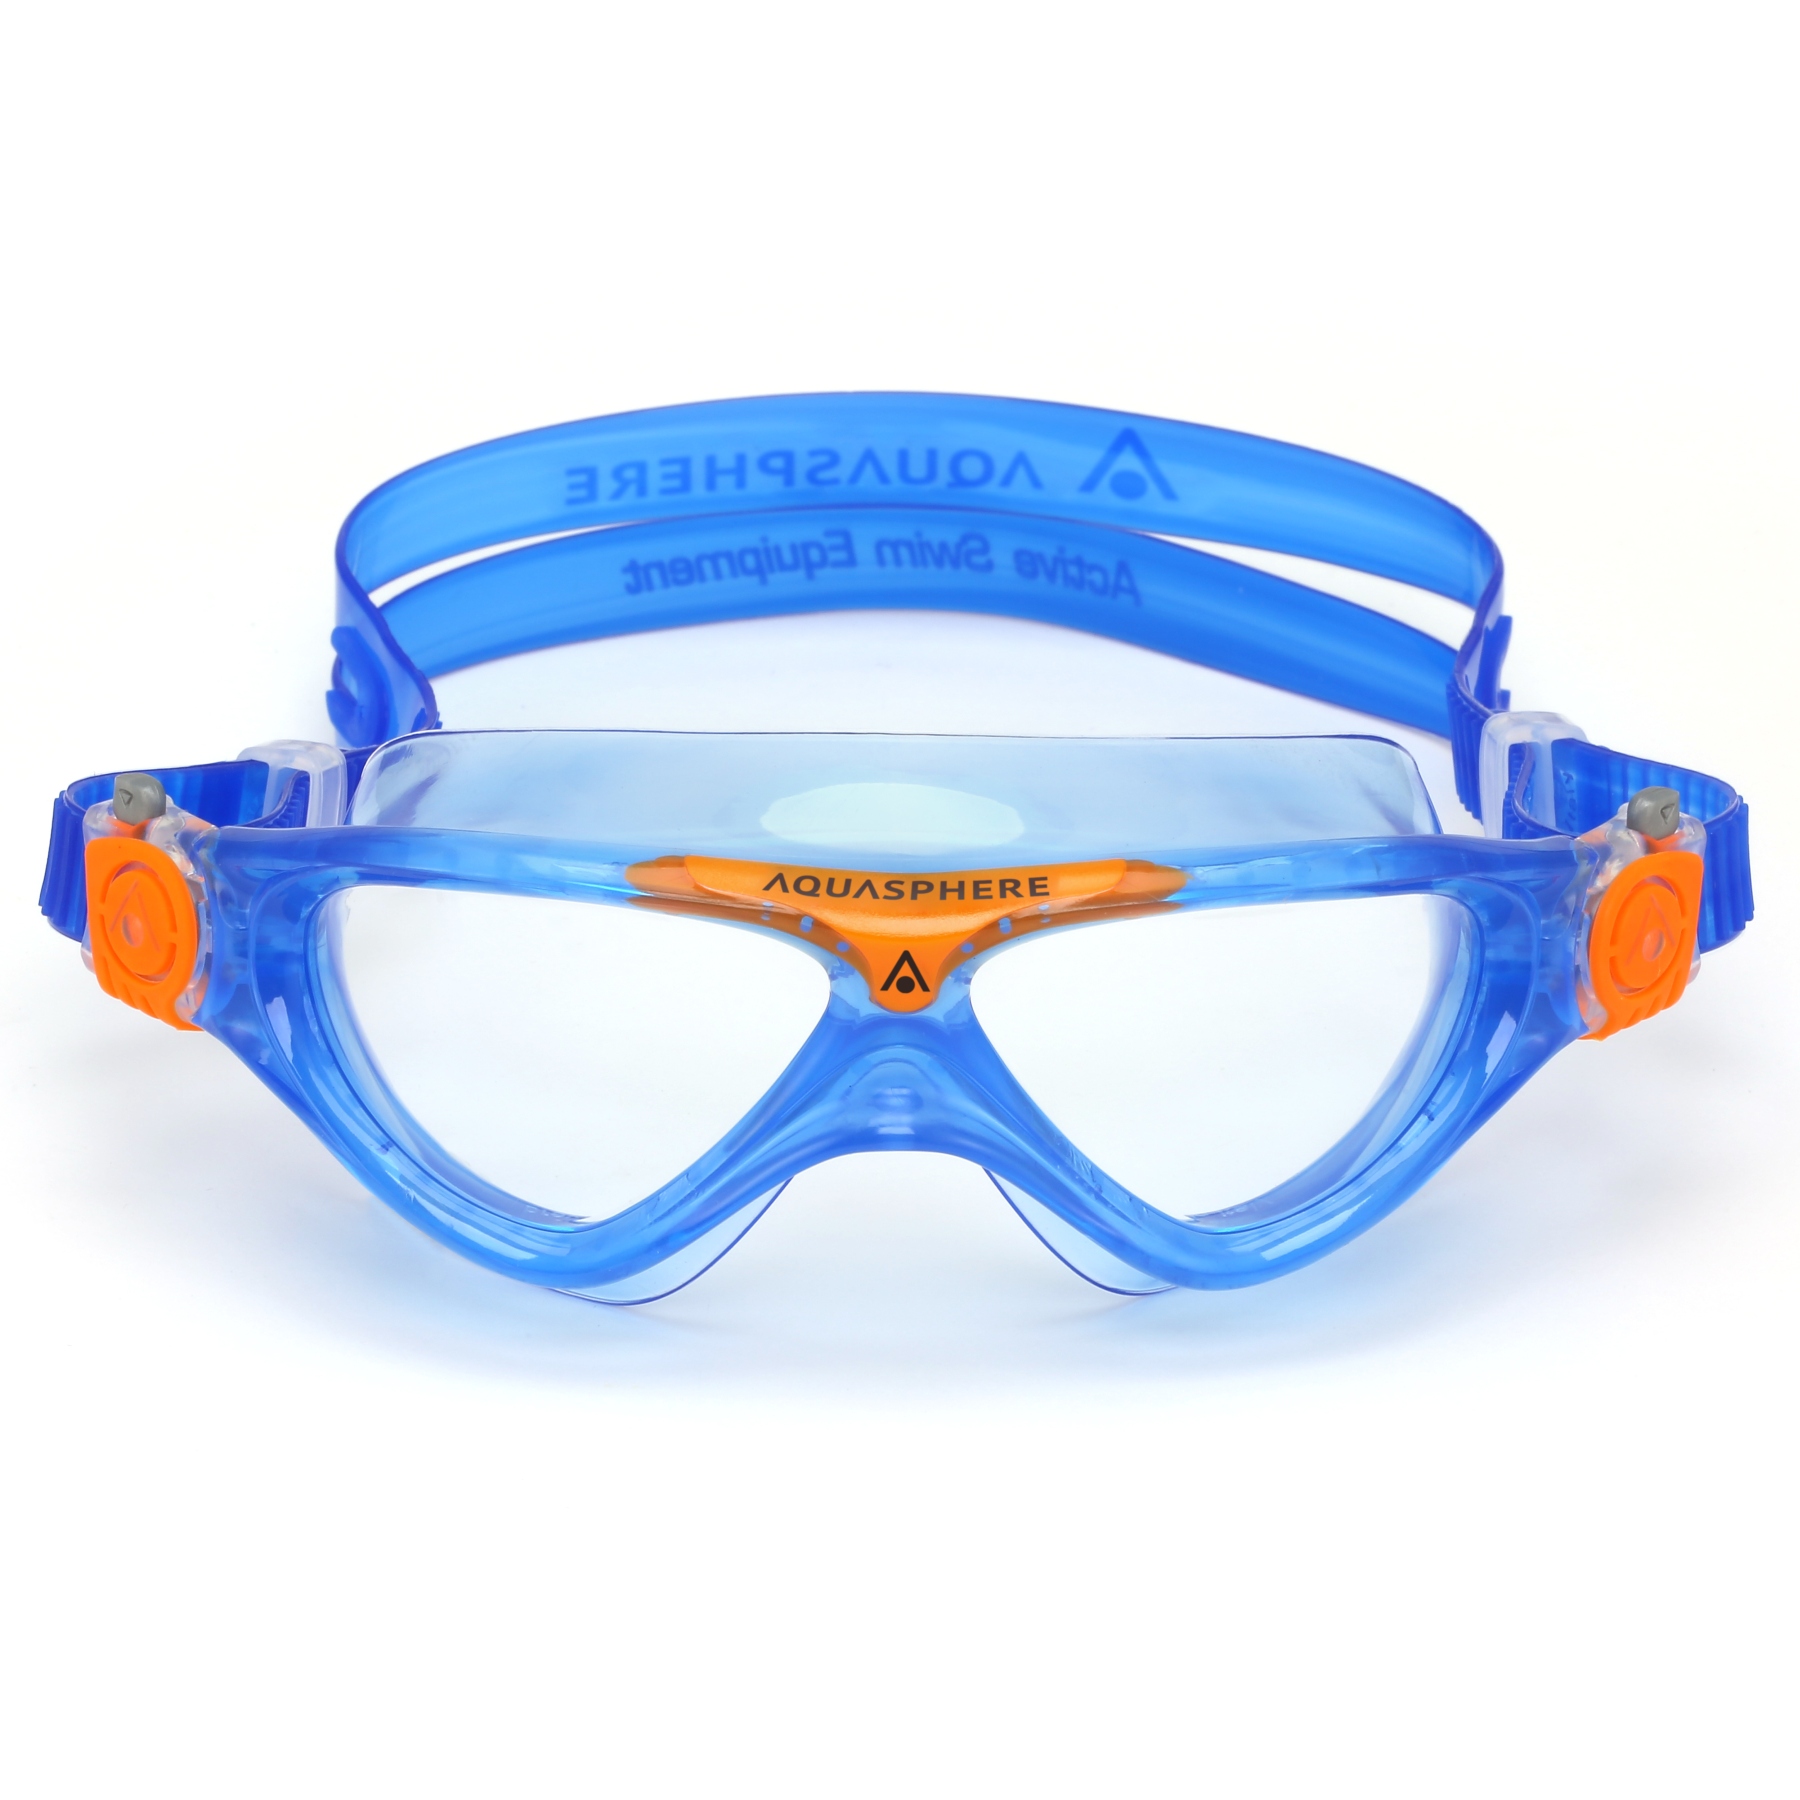 Productfoto van AQUASPHERE Vista Junior Kinderen Zwembril - Transparant - Blauw/Oranje